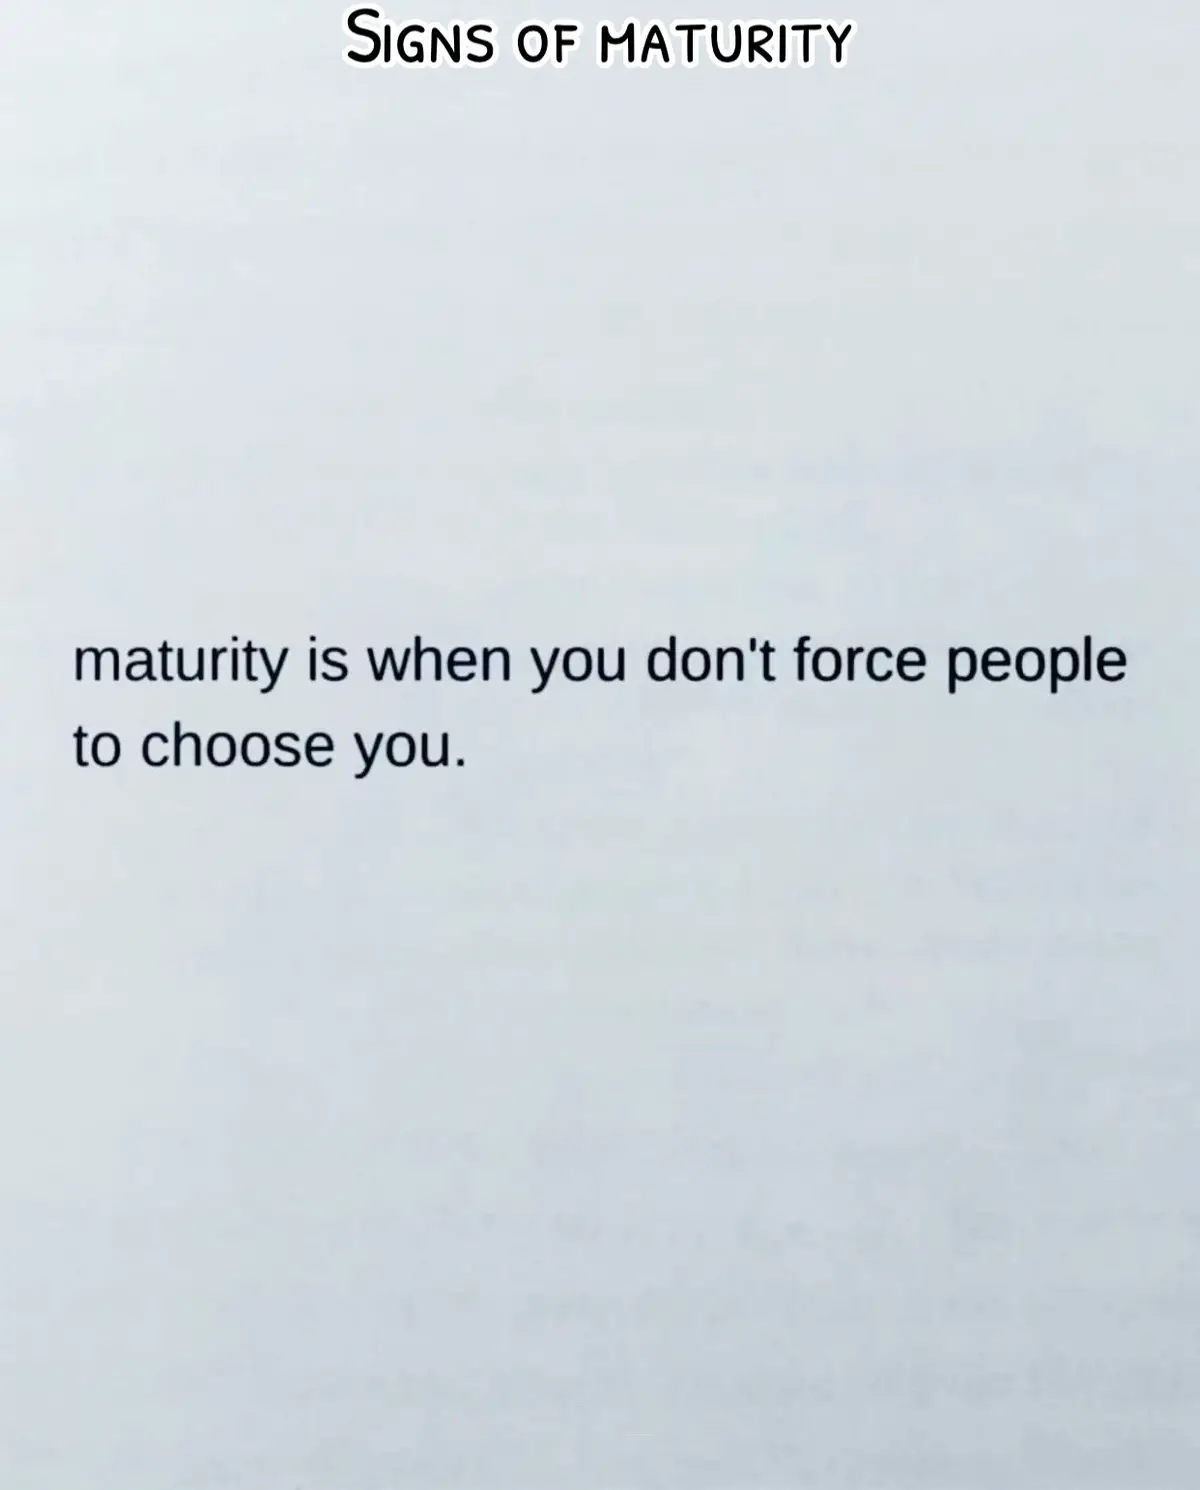 #maturity #chooseone #ignore #unlove #forgiving #understanding 